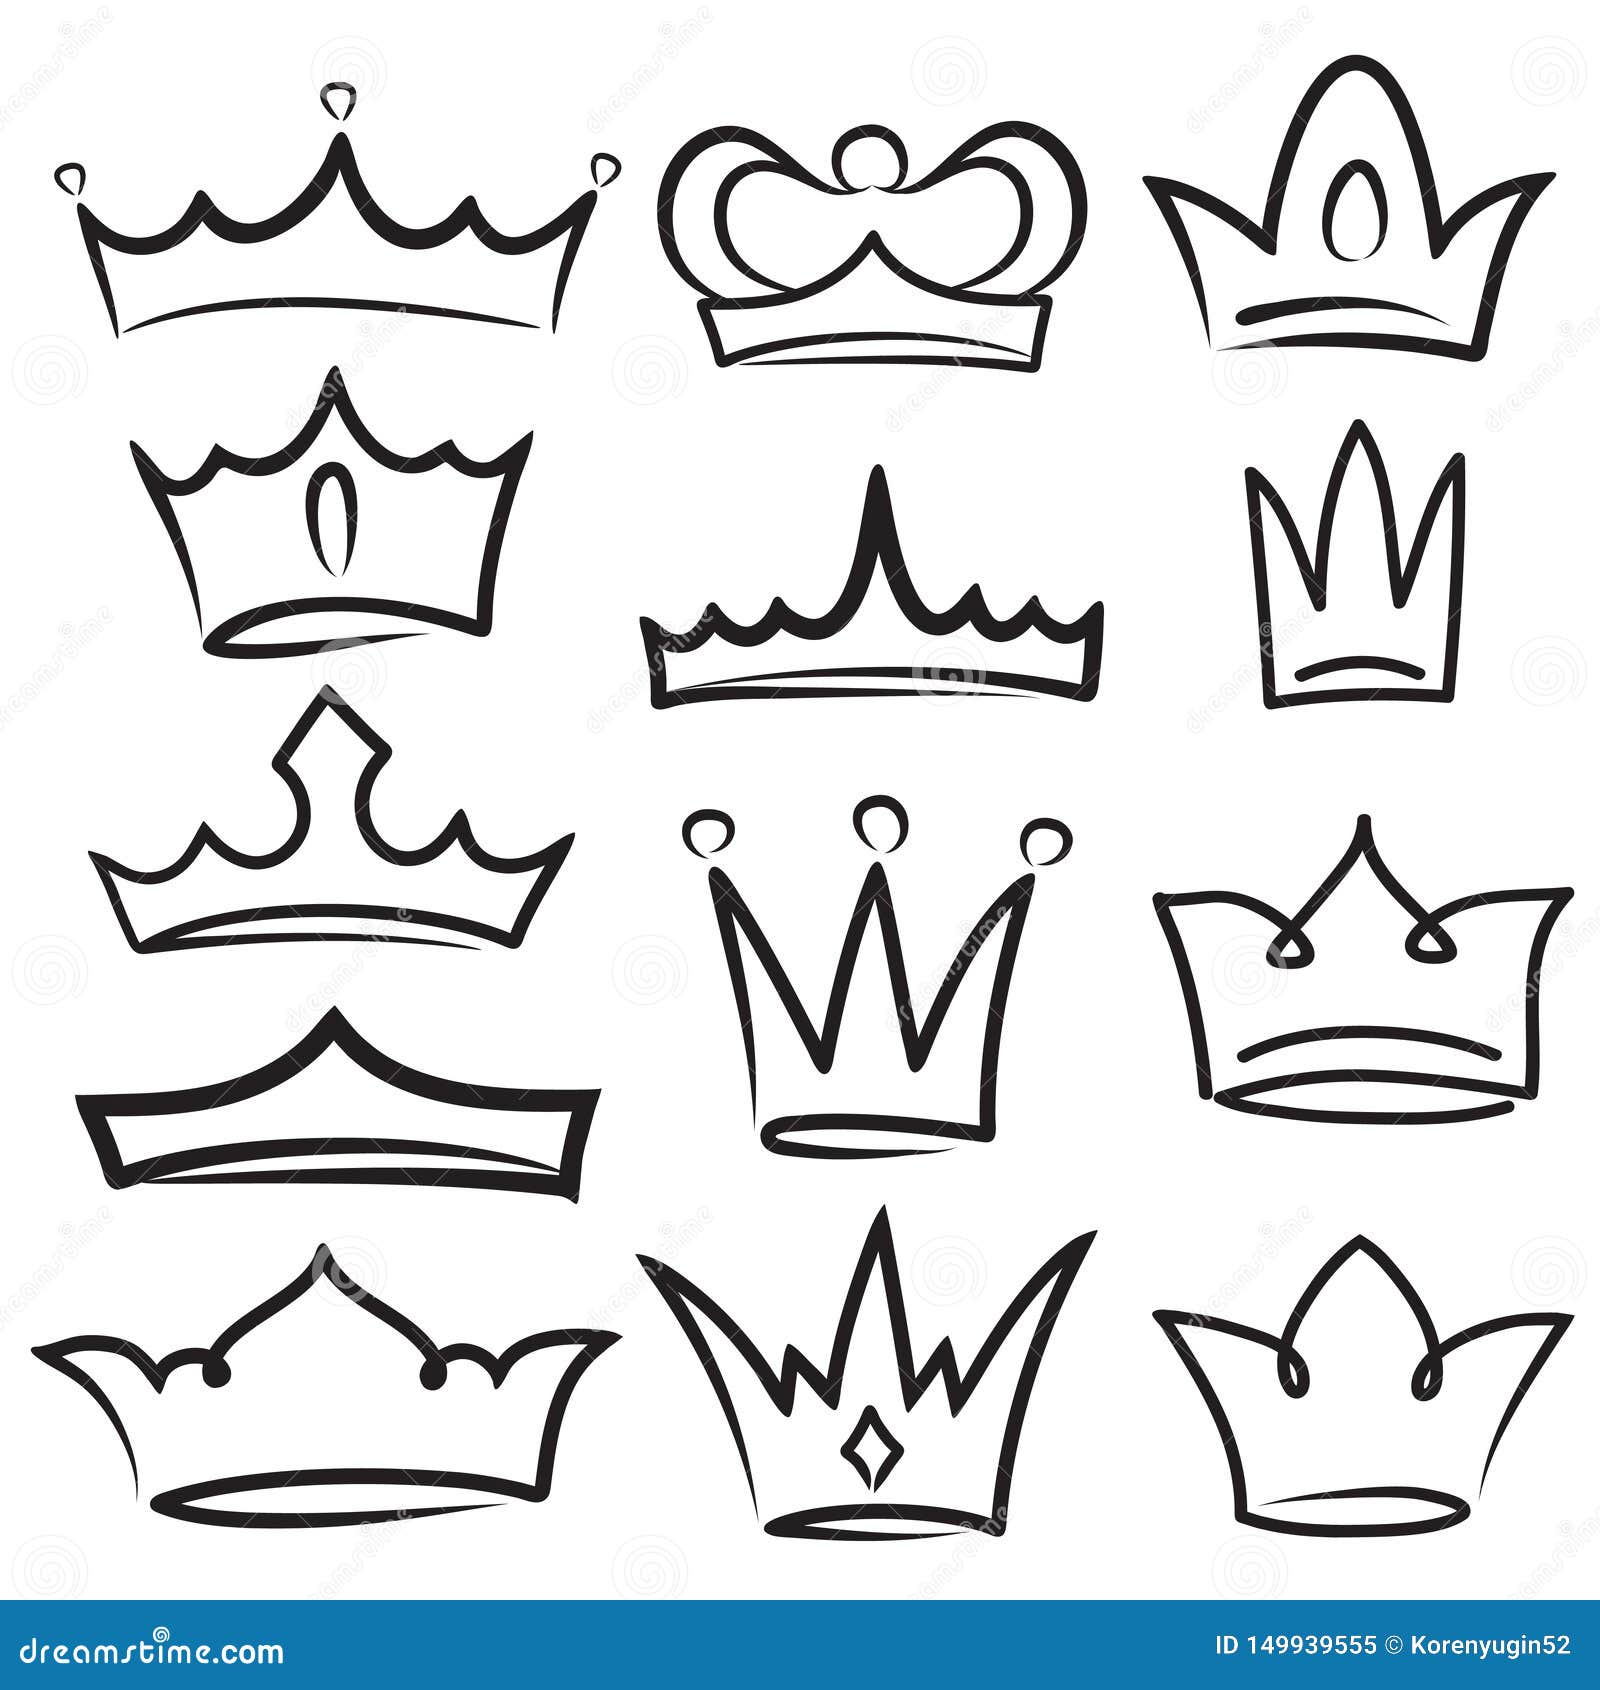 Sketch Crown Simple Graffiti Crowning Elegant Queen Or King Crowns Hand Drawn Royal Imperial Coronation Symbols Monarch Illustration De Vecteur Illustration Du Queen Royal 149939555